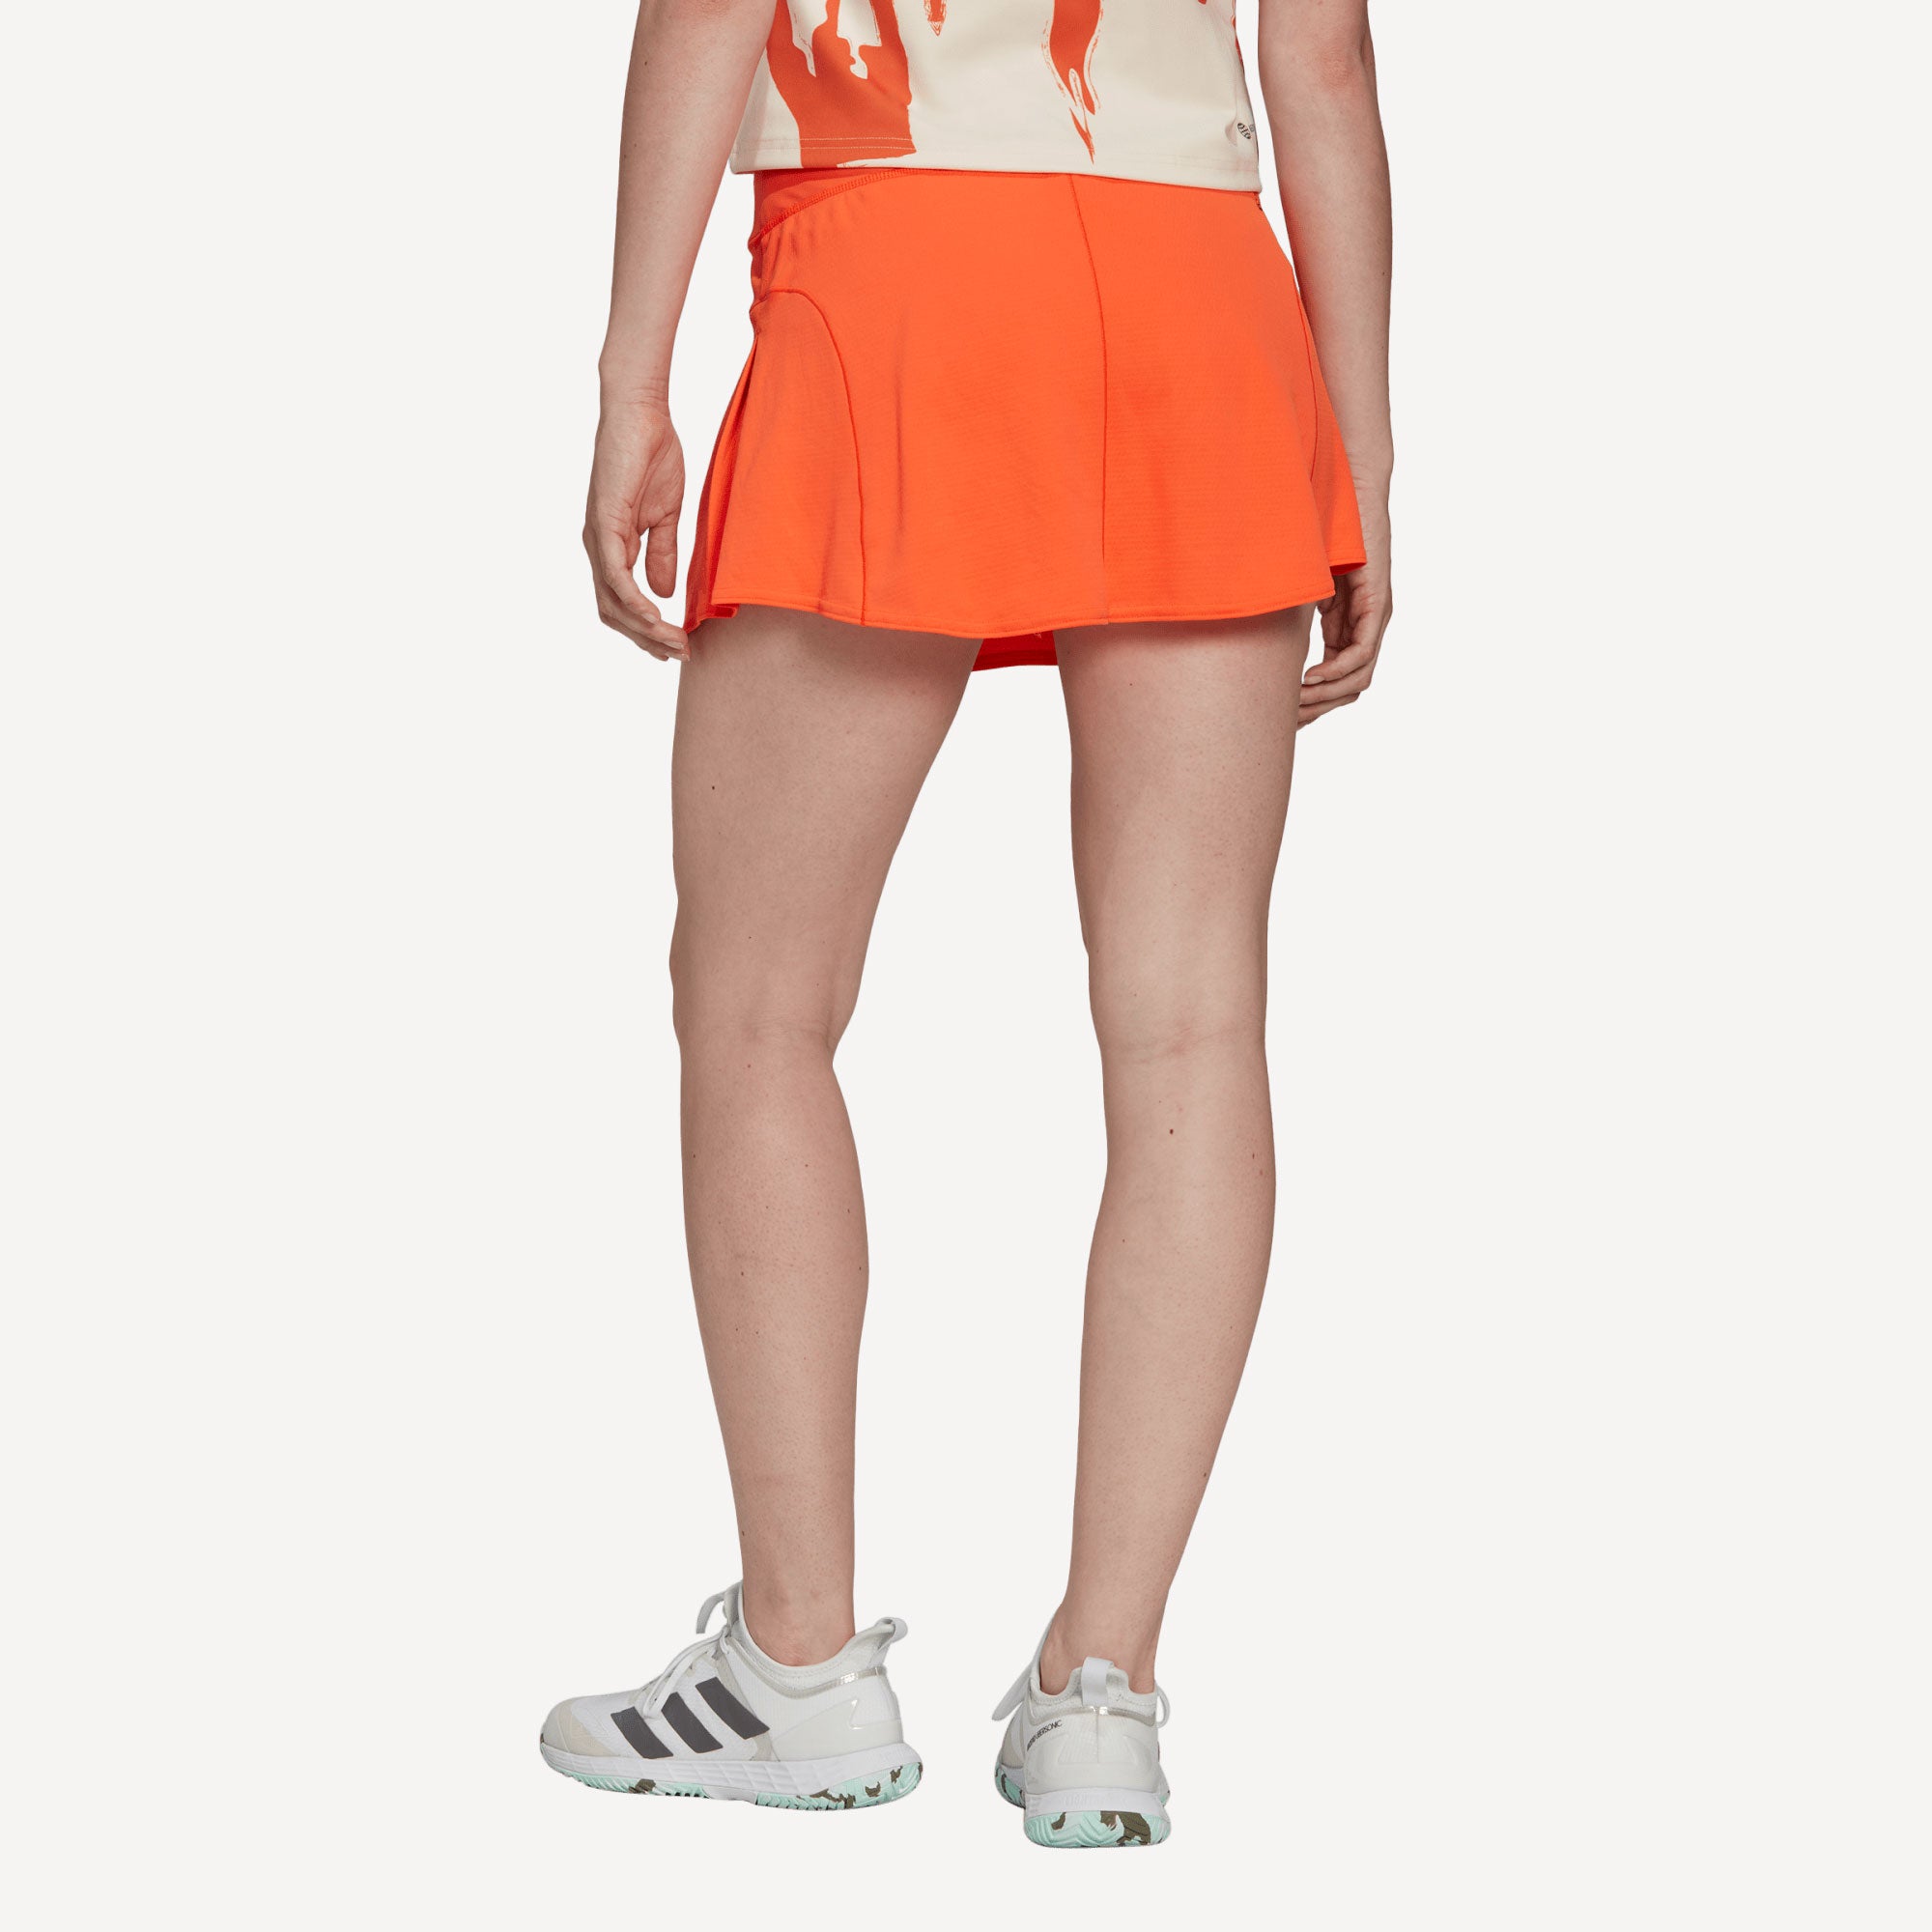 adidas Match Women's Tennis Skirt Orange (2)